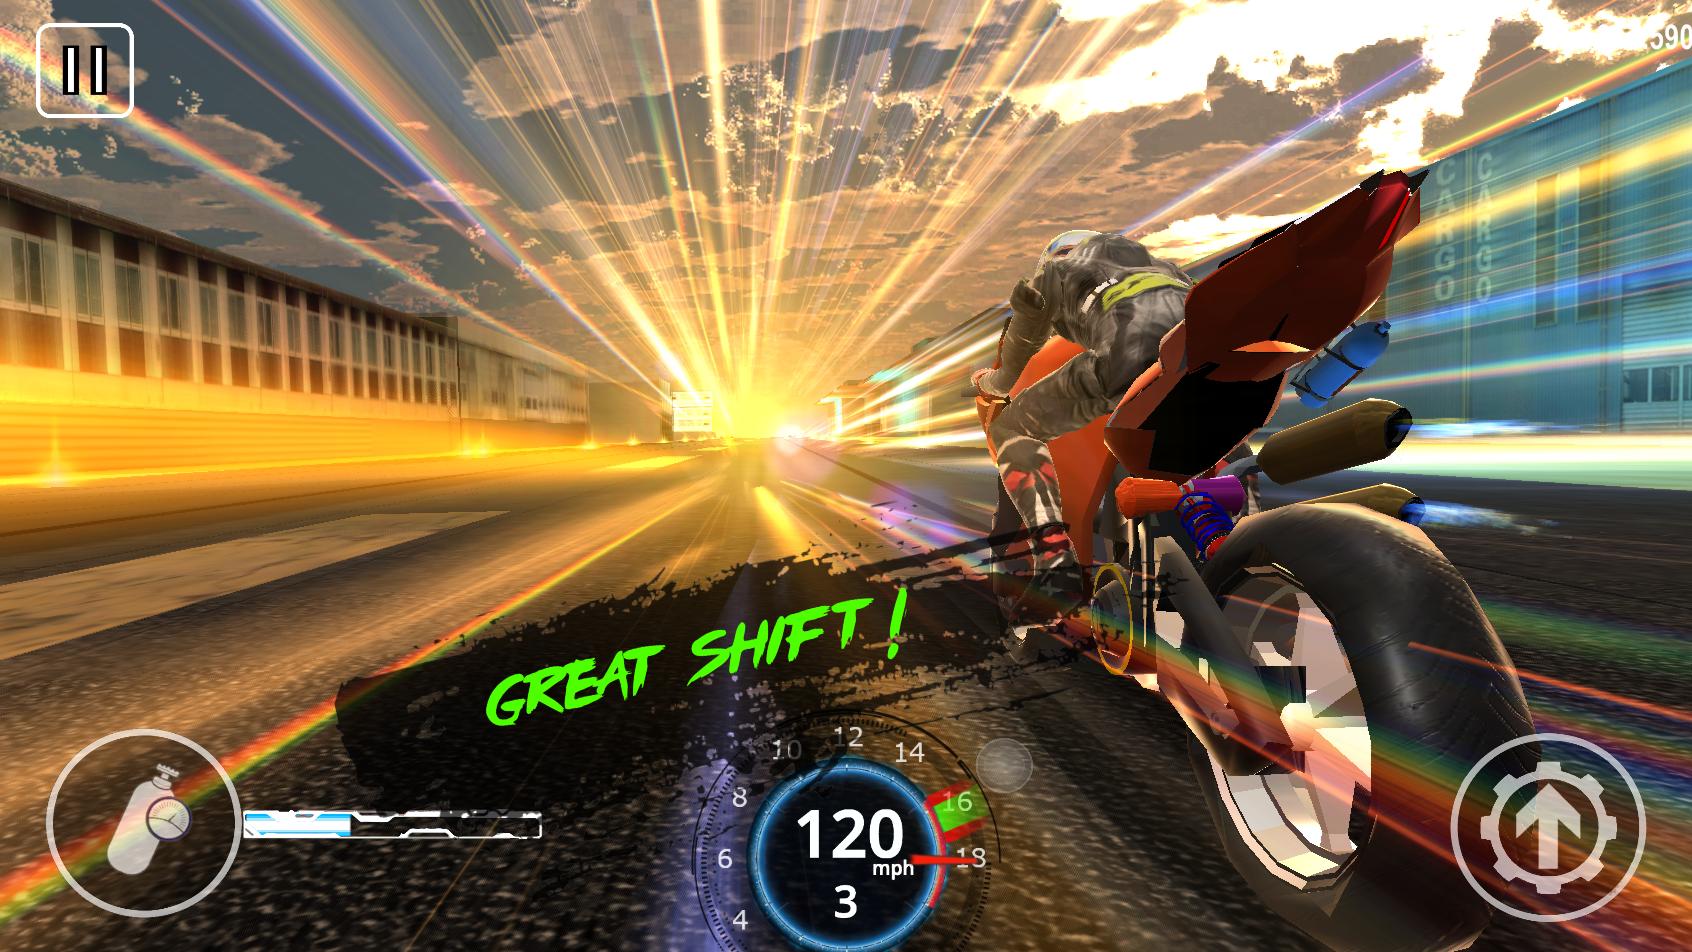 Rebel Gears Drag Bike Racing / CSR Race Moto Game 1.3.2 Screenshot 9